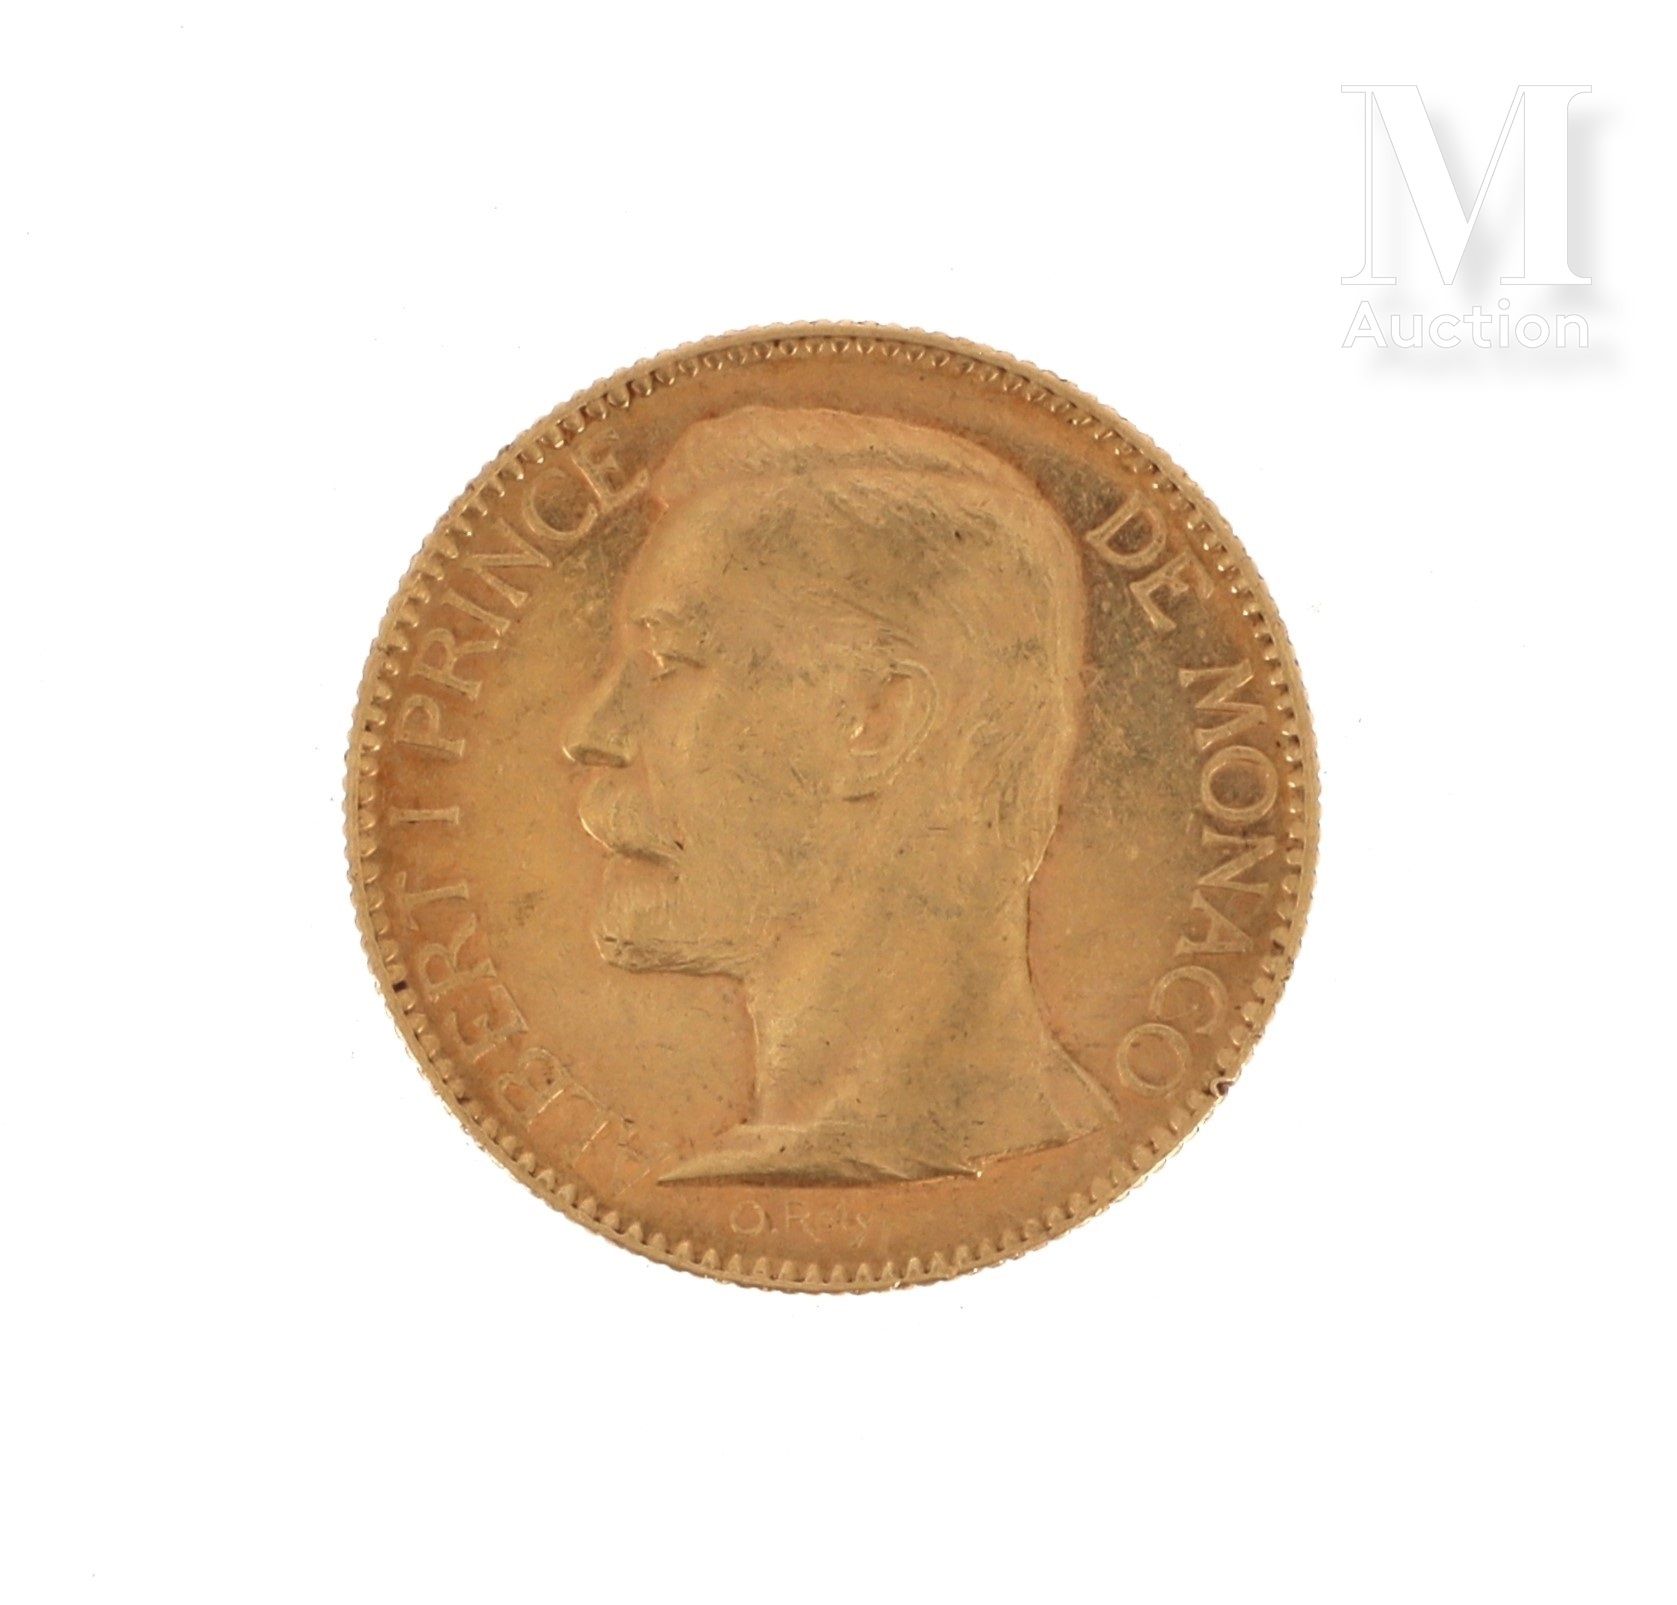 Pièce 100 FF or Une pièce en or de 100 Francs Monaco Albert I

1901